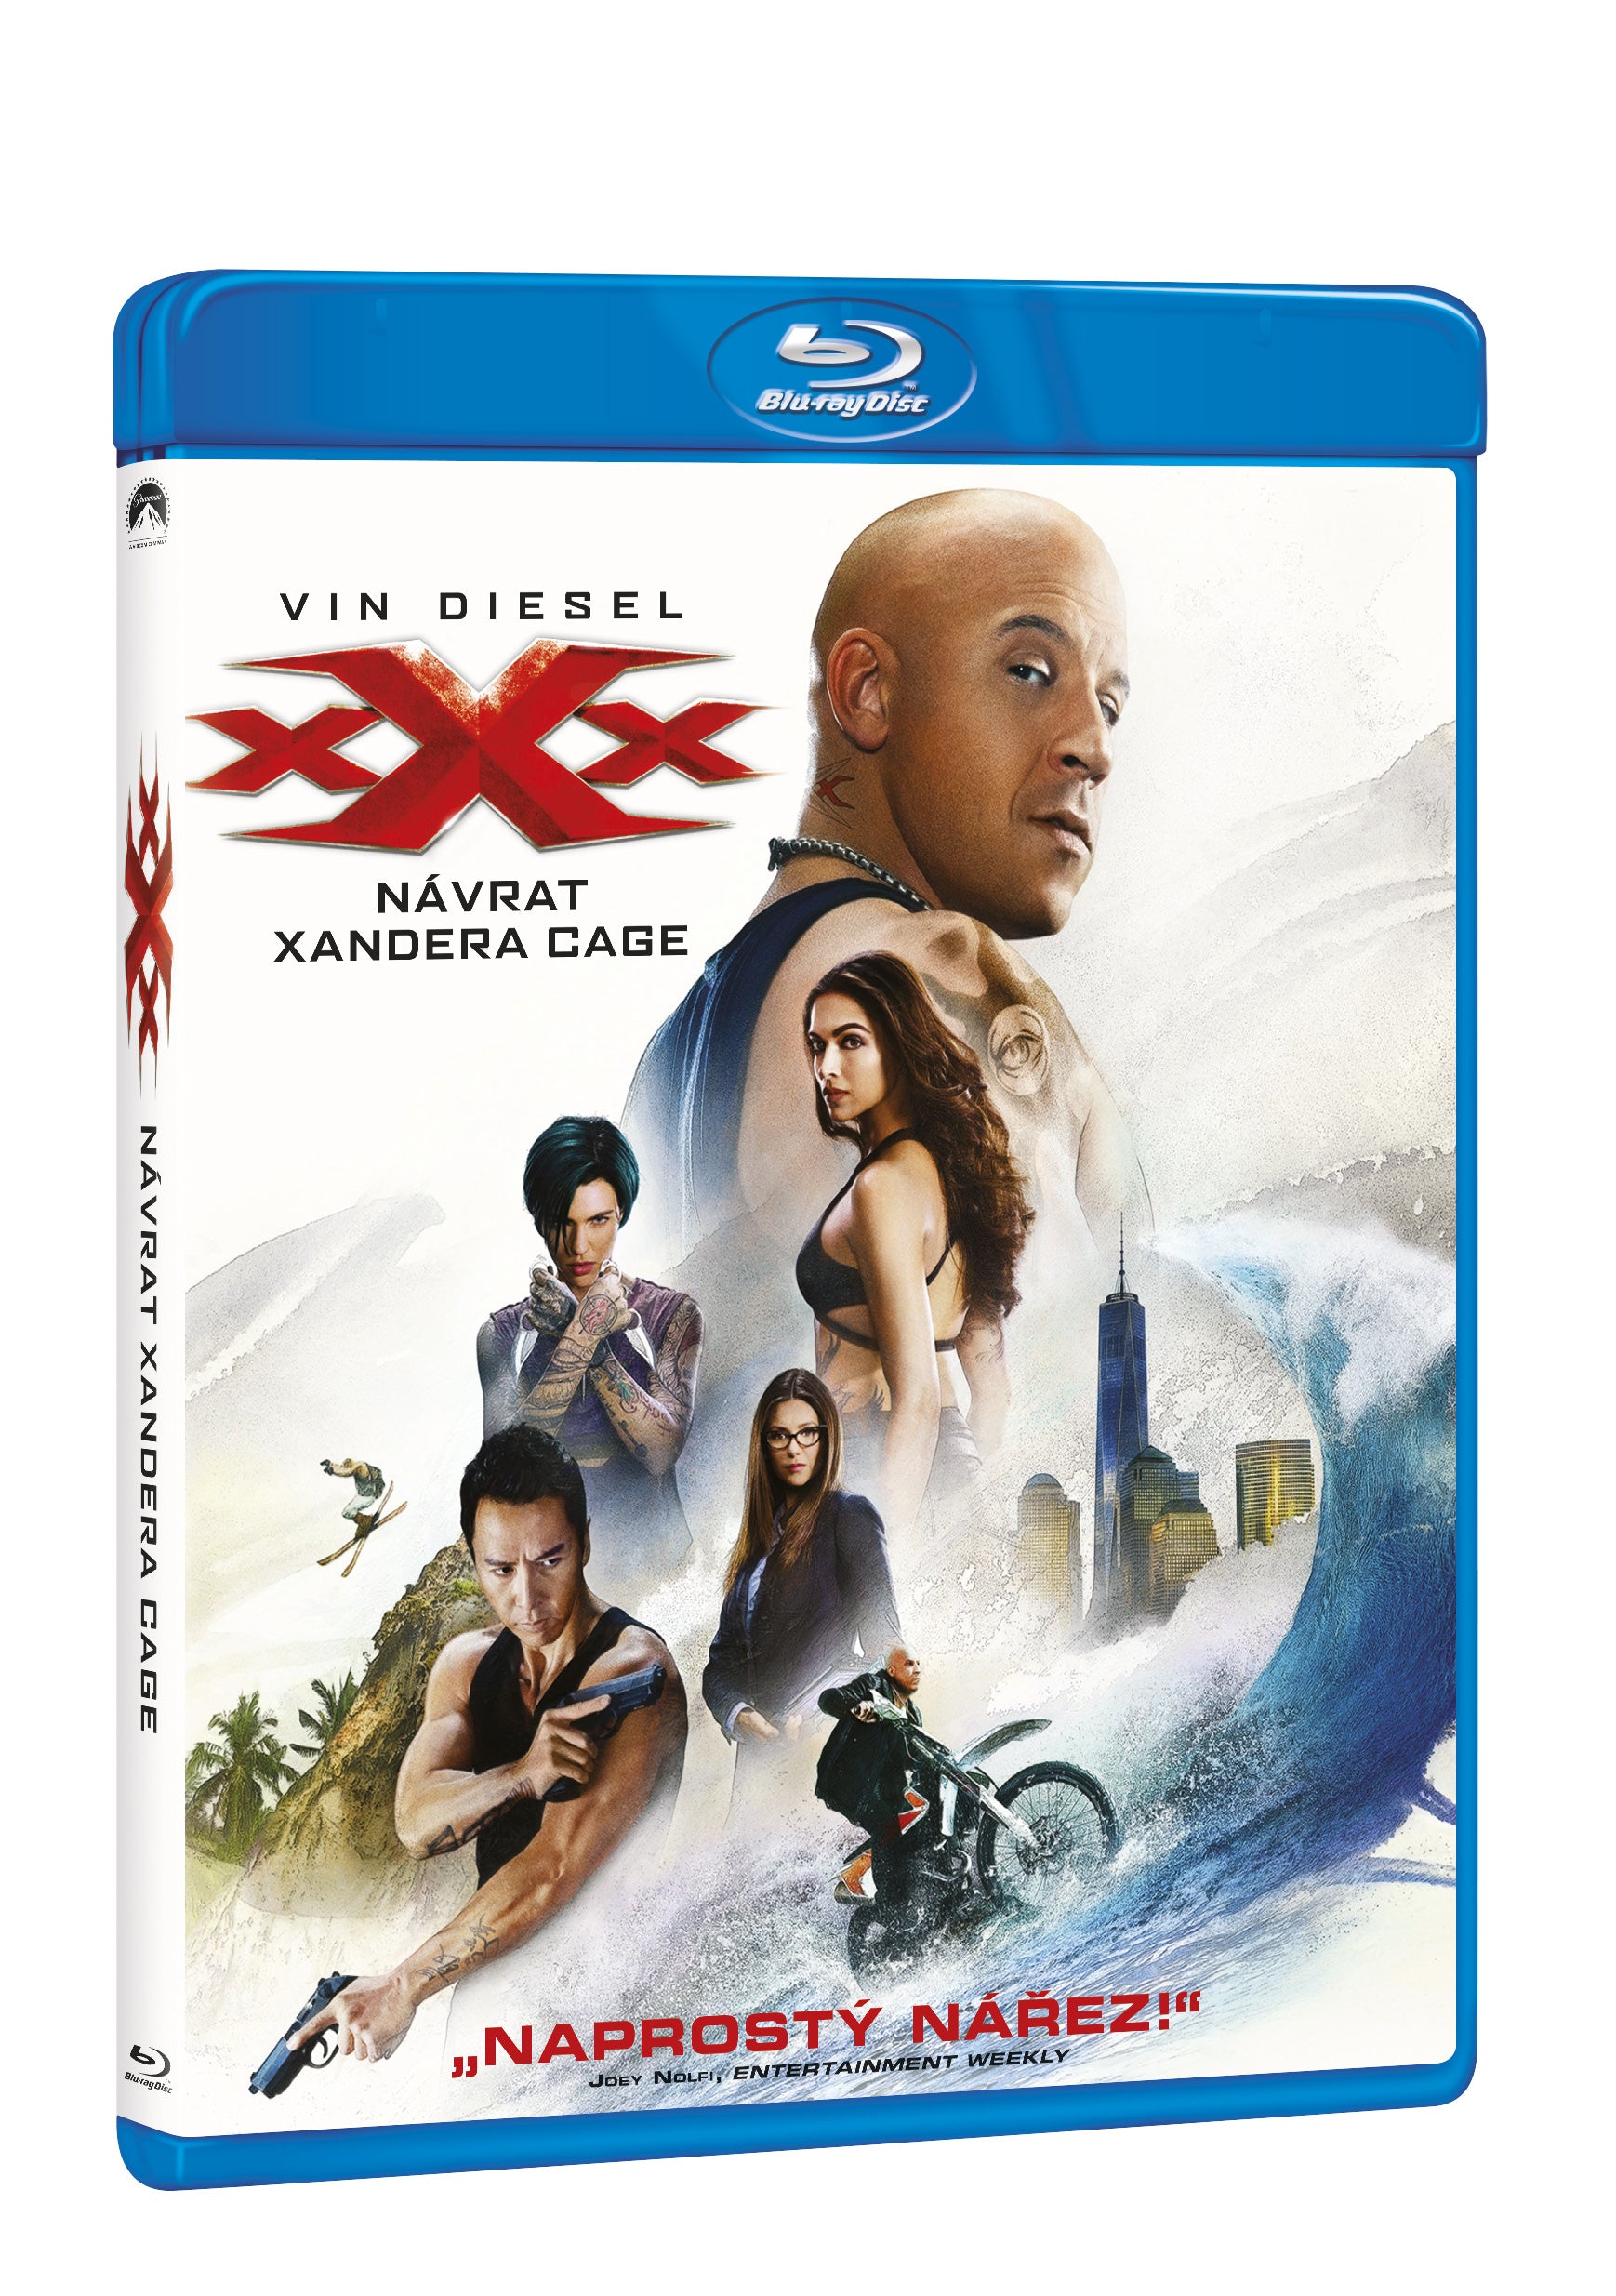 xXx: Navrat Xandera Cage BD / xXx: The Return Of Xander Cage - Czech version